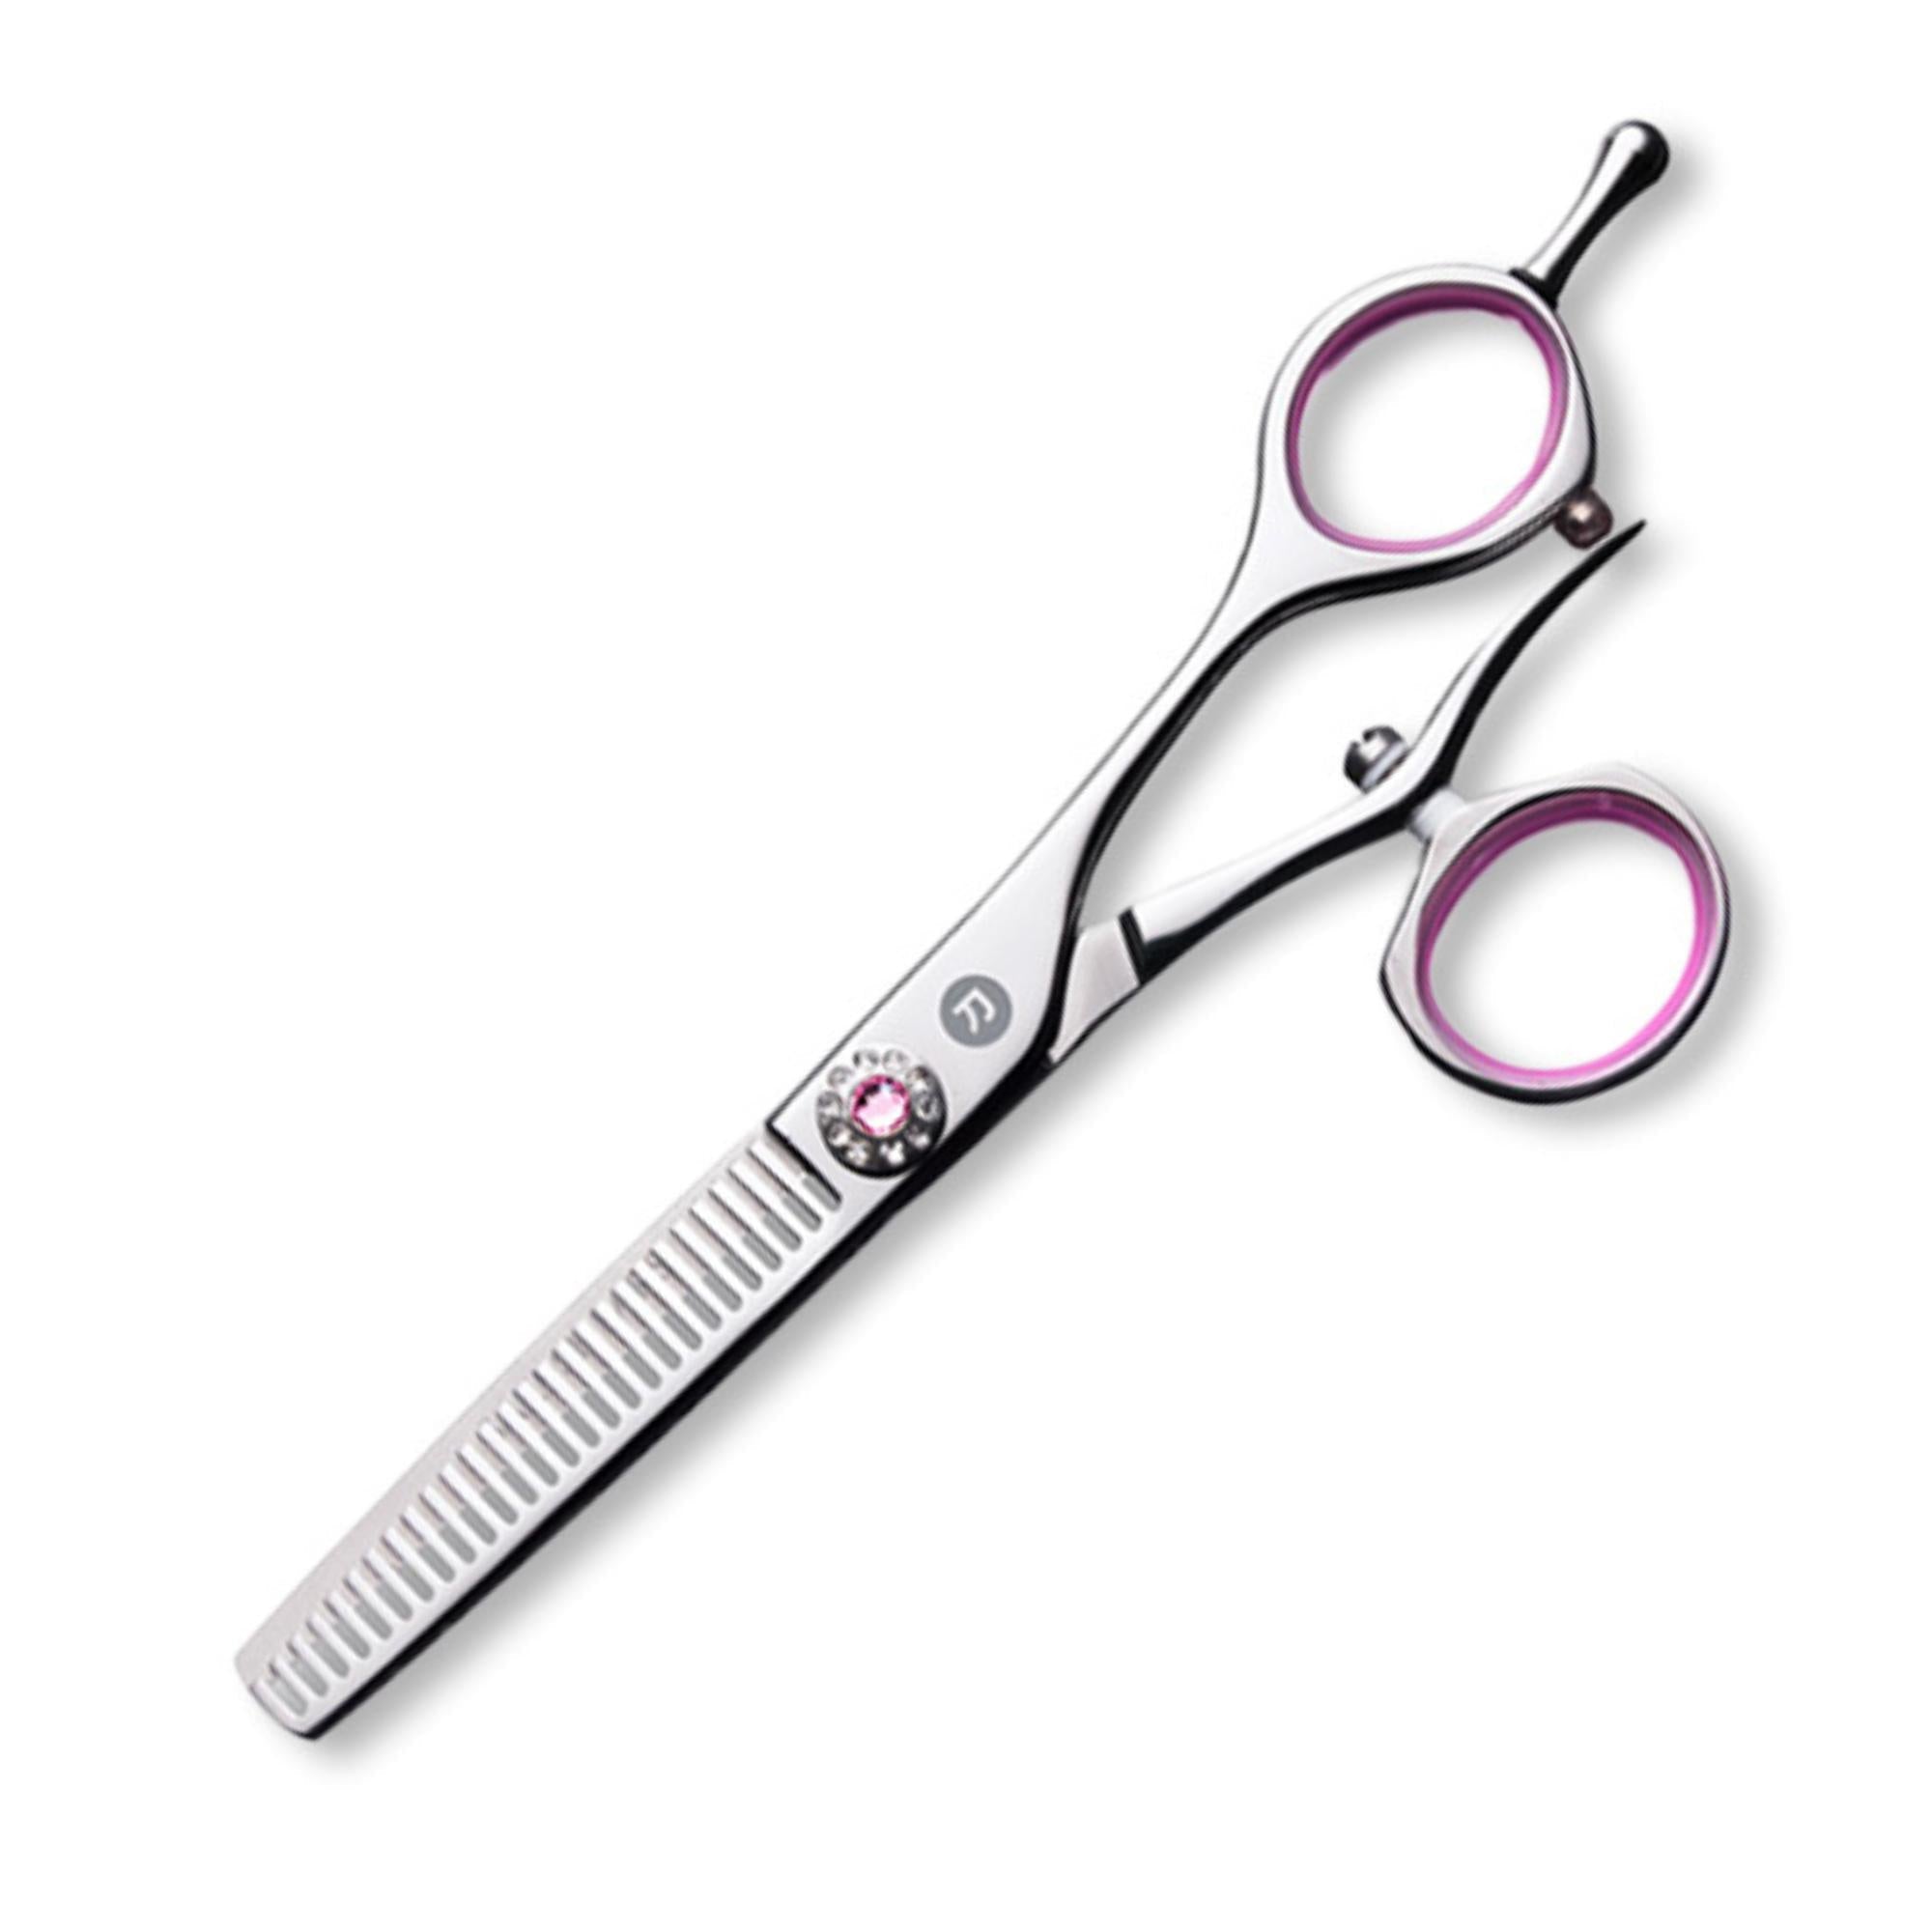 Sakura 5.5 Damascus Steel Hair Cutting Scissors Shears